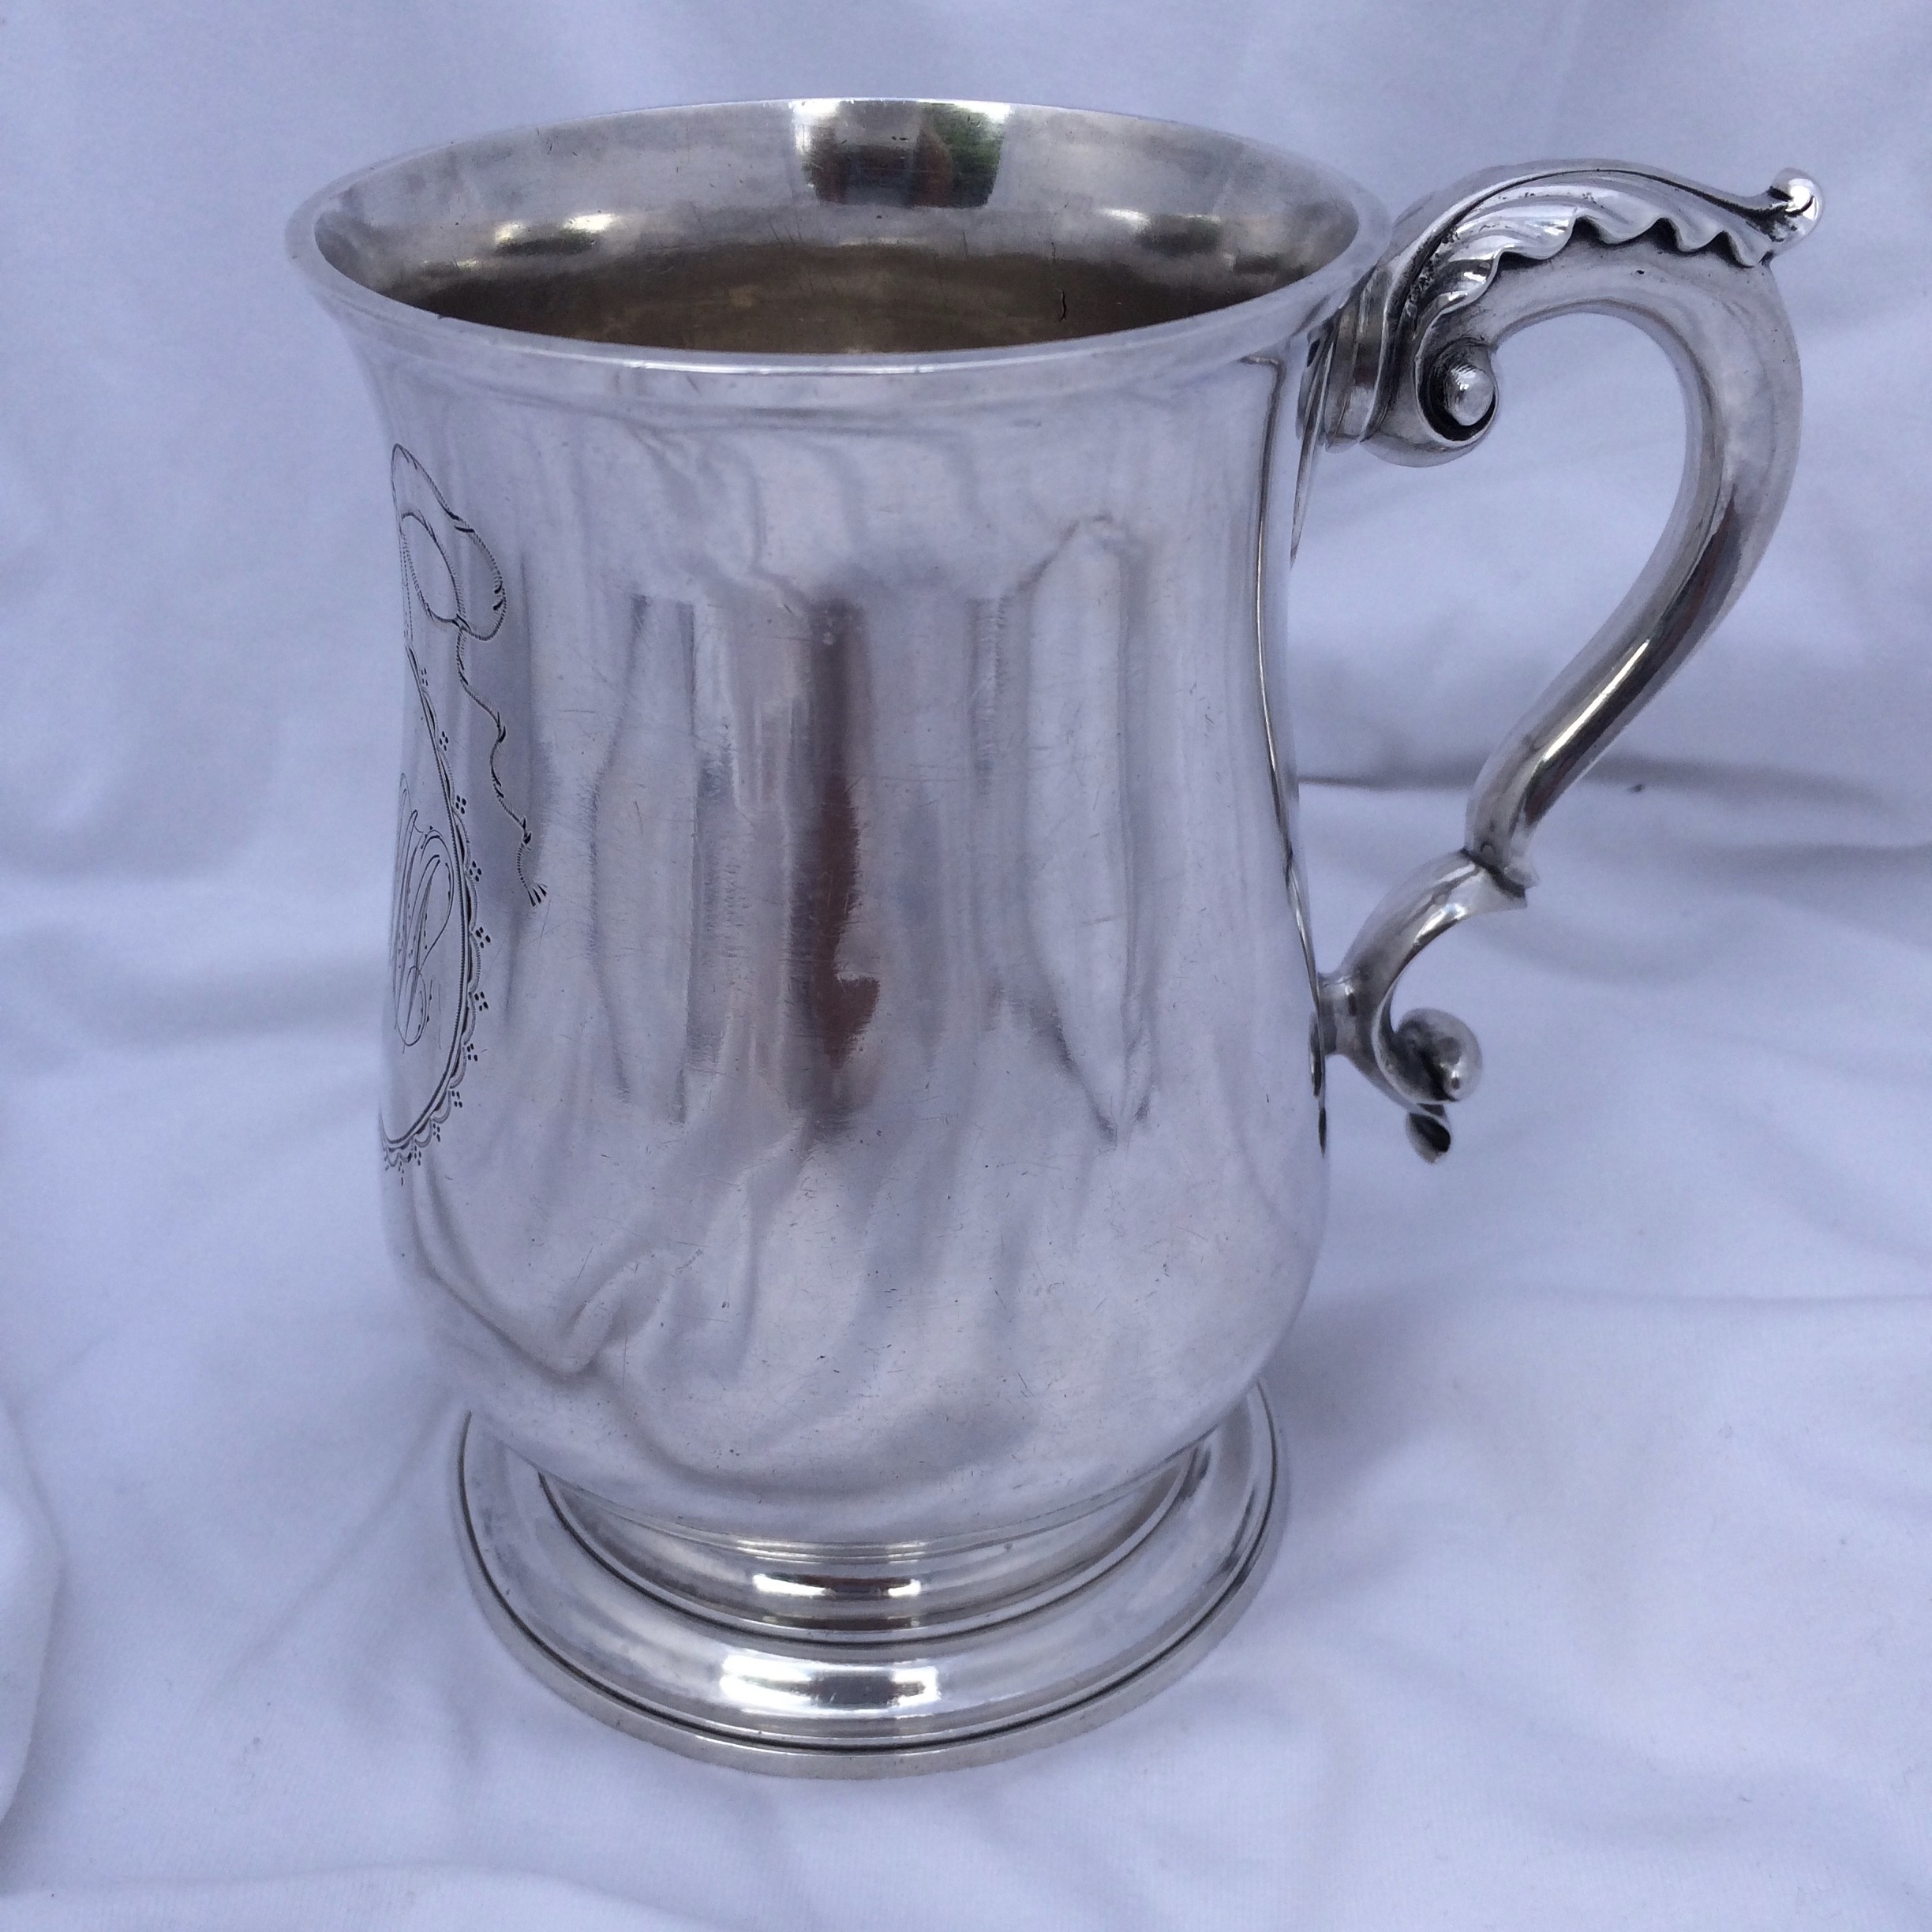 American Silver Cann By John Burger, New York, NY Circa 1790